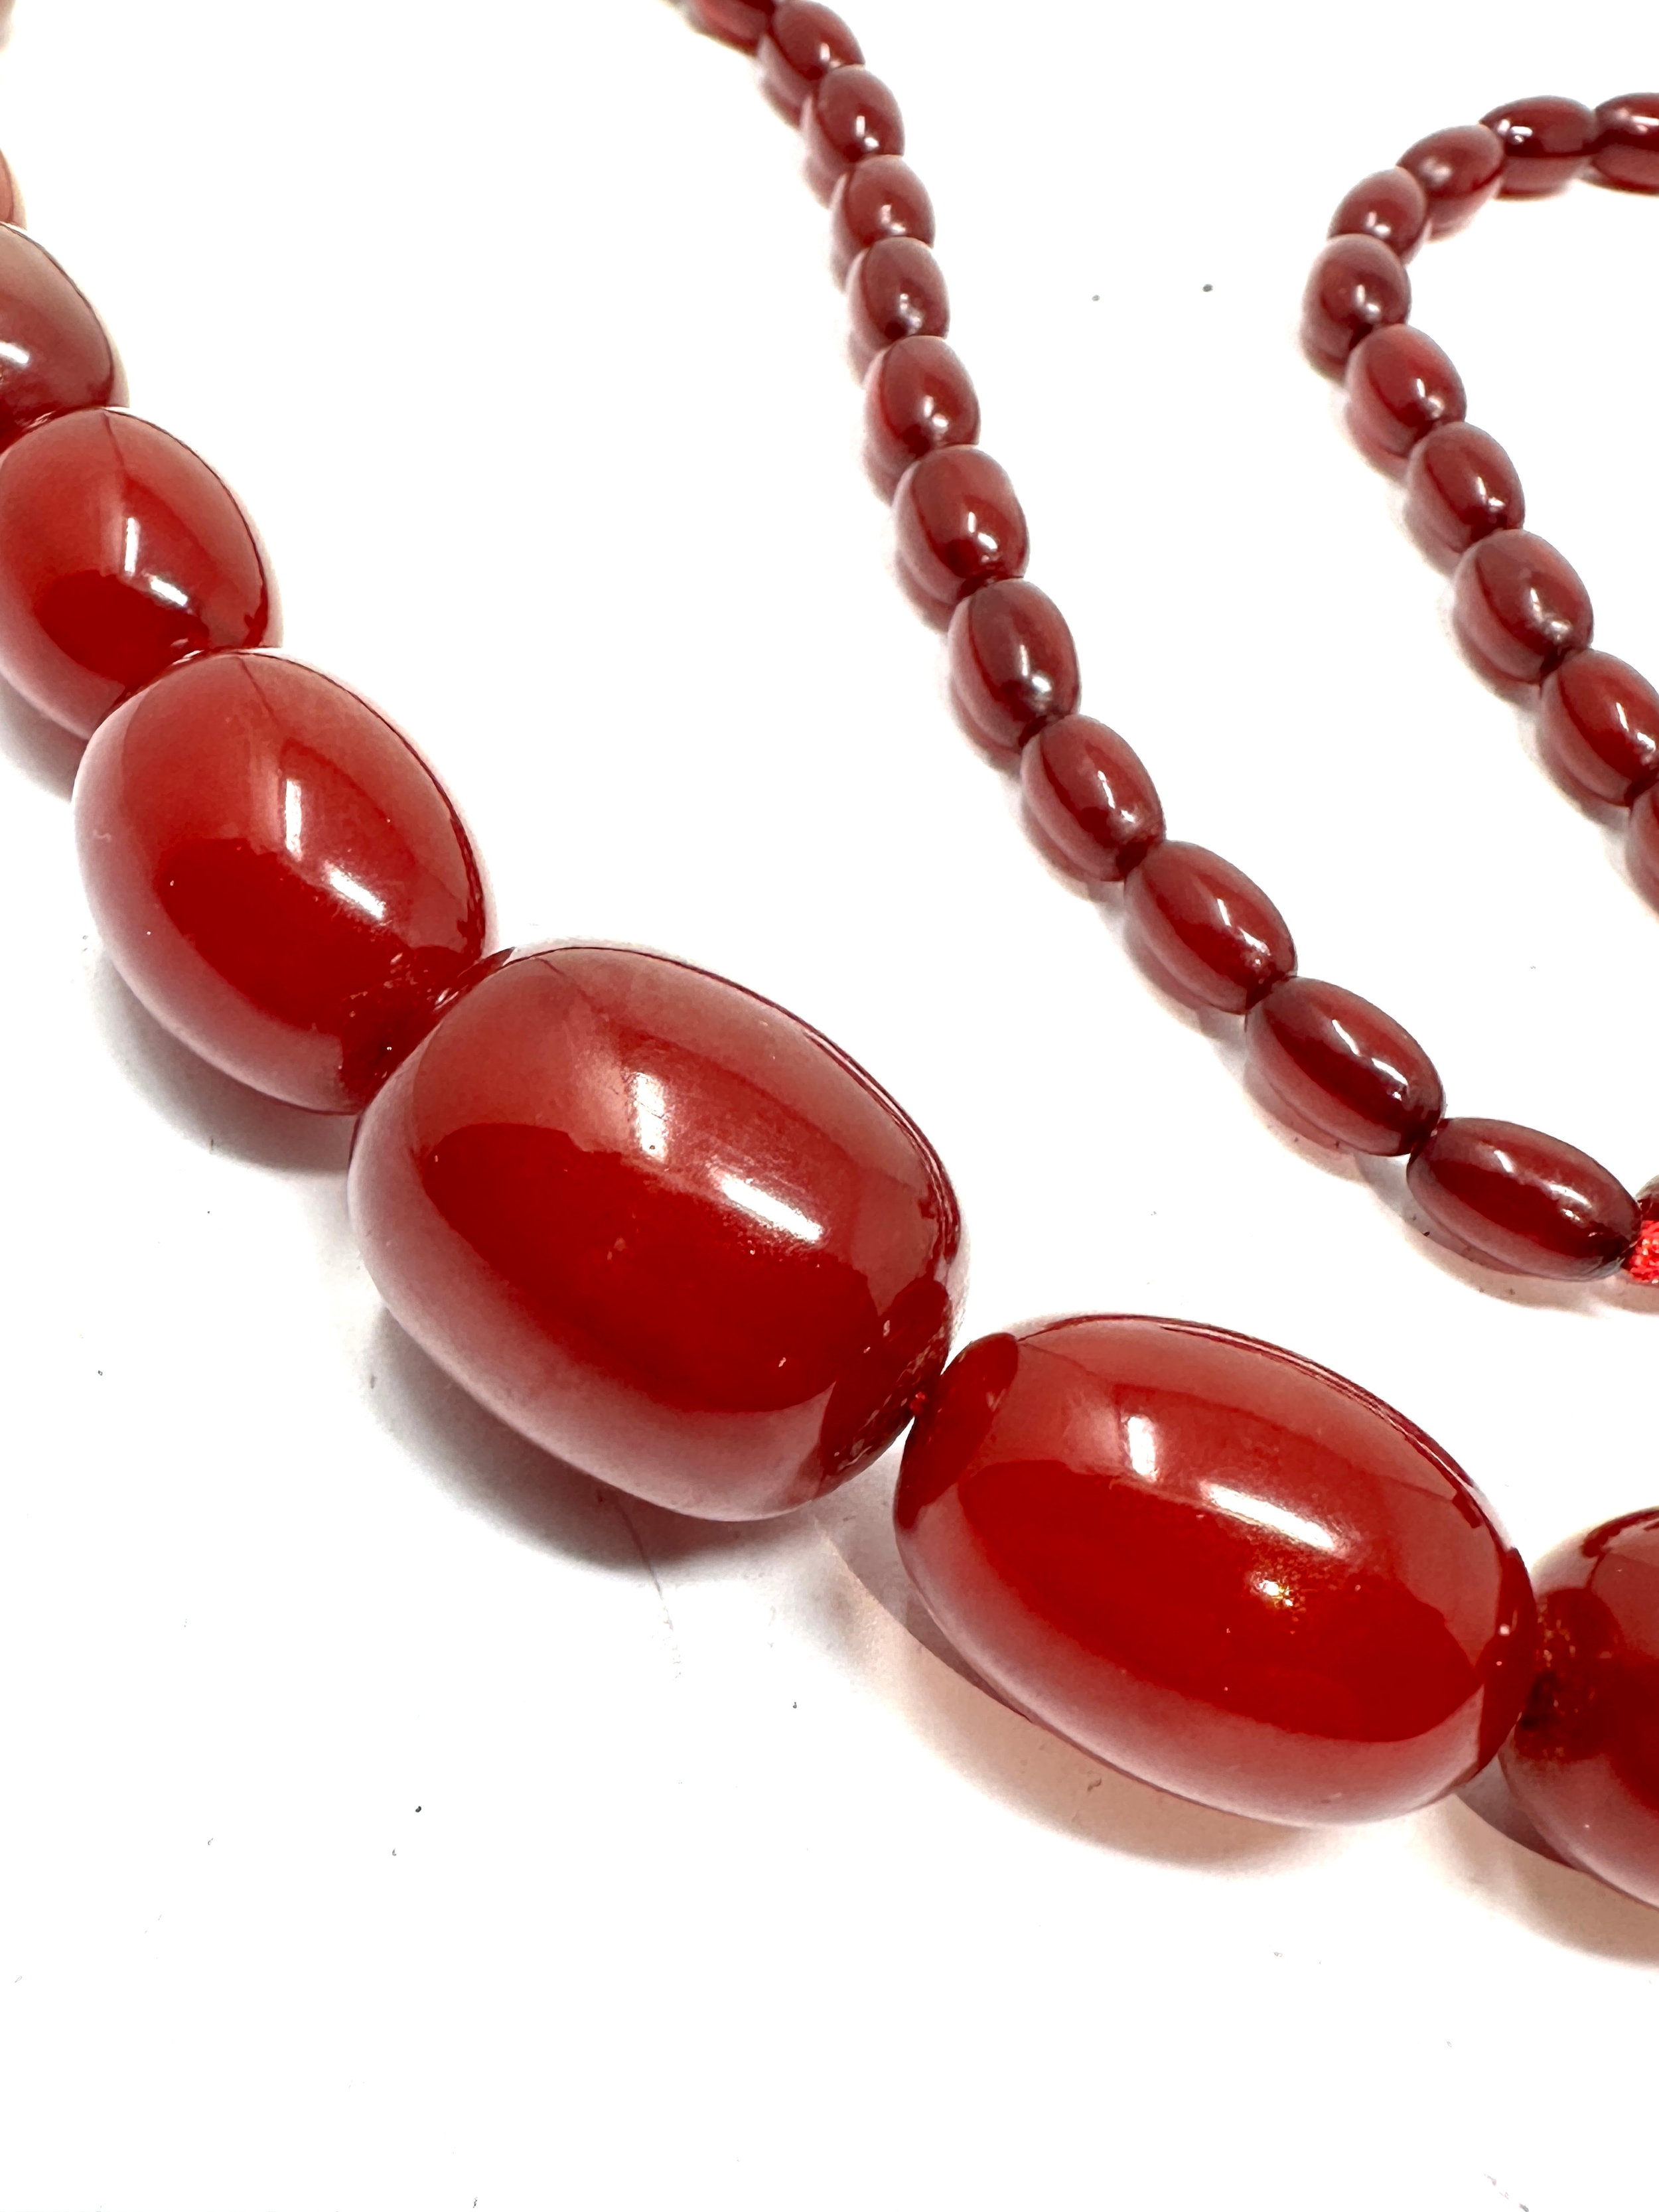 Antique cherry amber / bakelite bead necklace weight 63g good internal streaking - Image 2 of 3